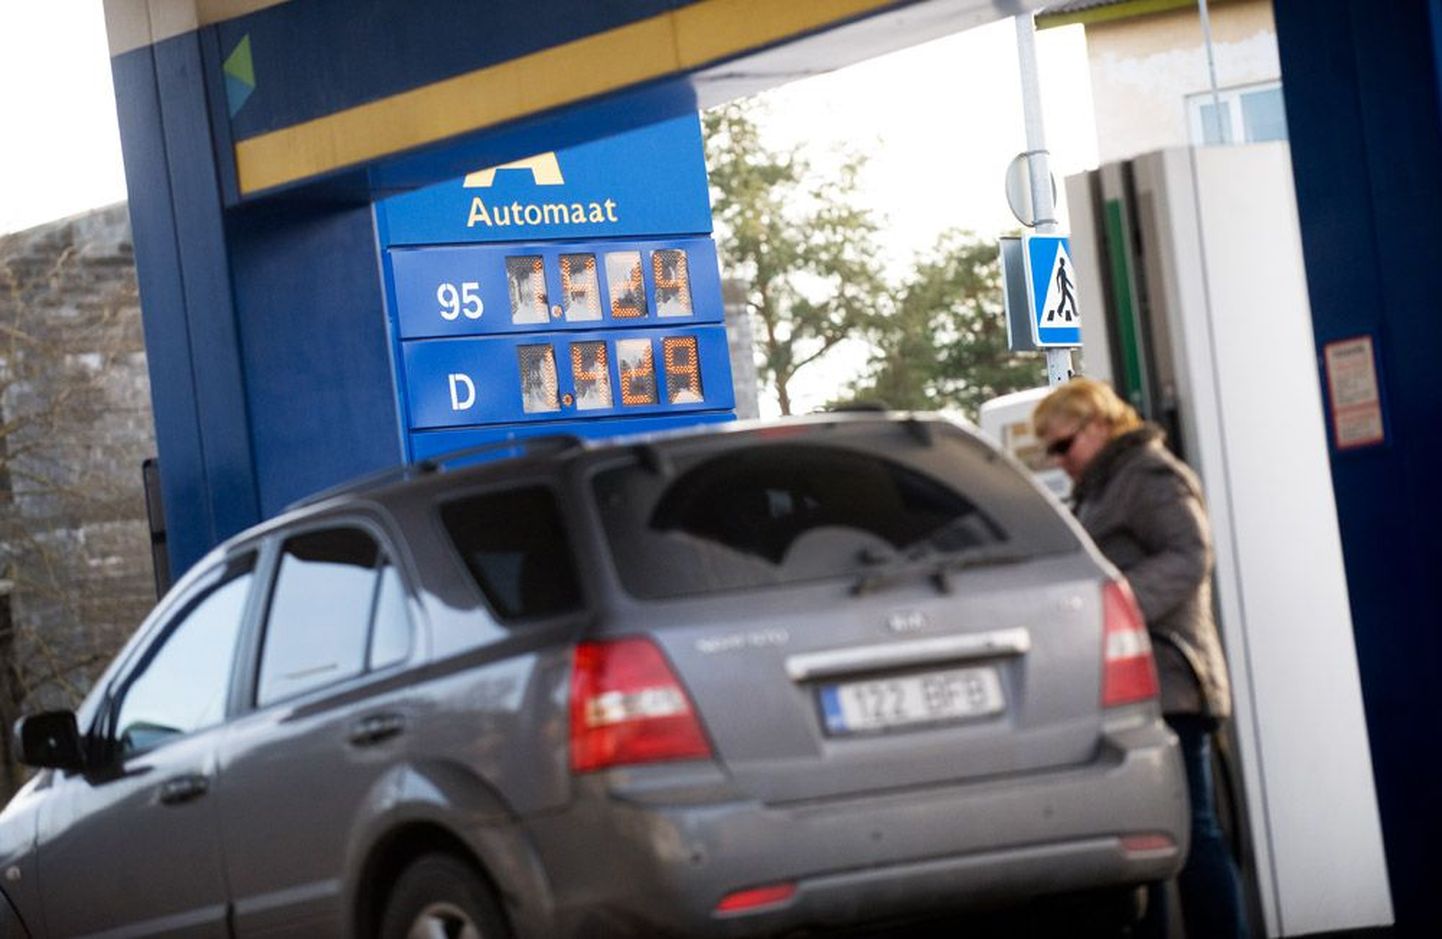 Теперь литр бензина 95 на заправках Neste стоит 1,309 евро.